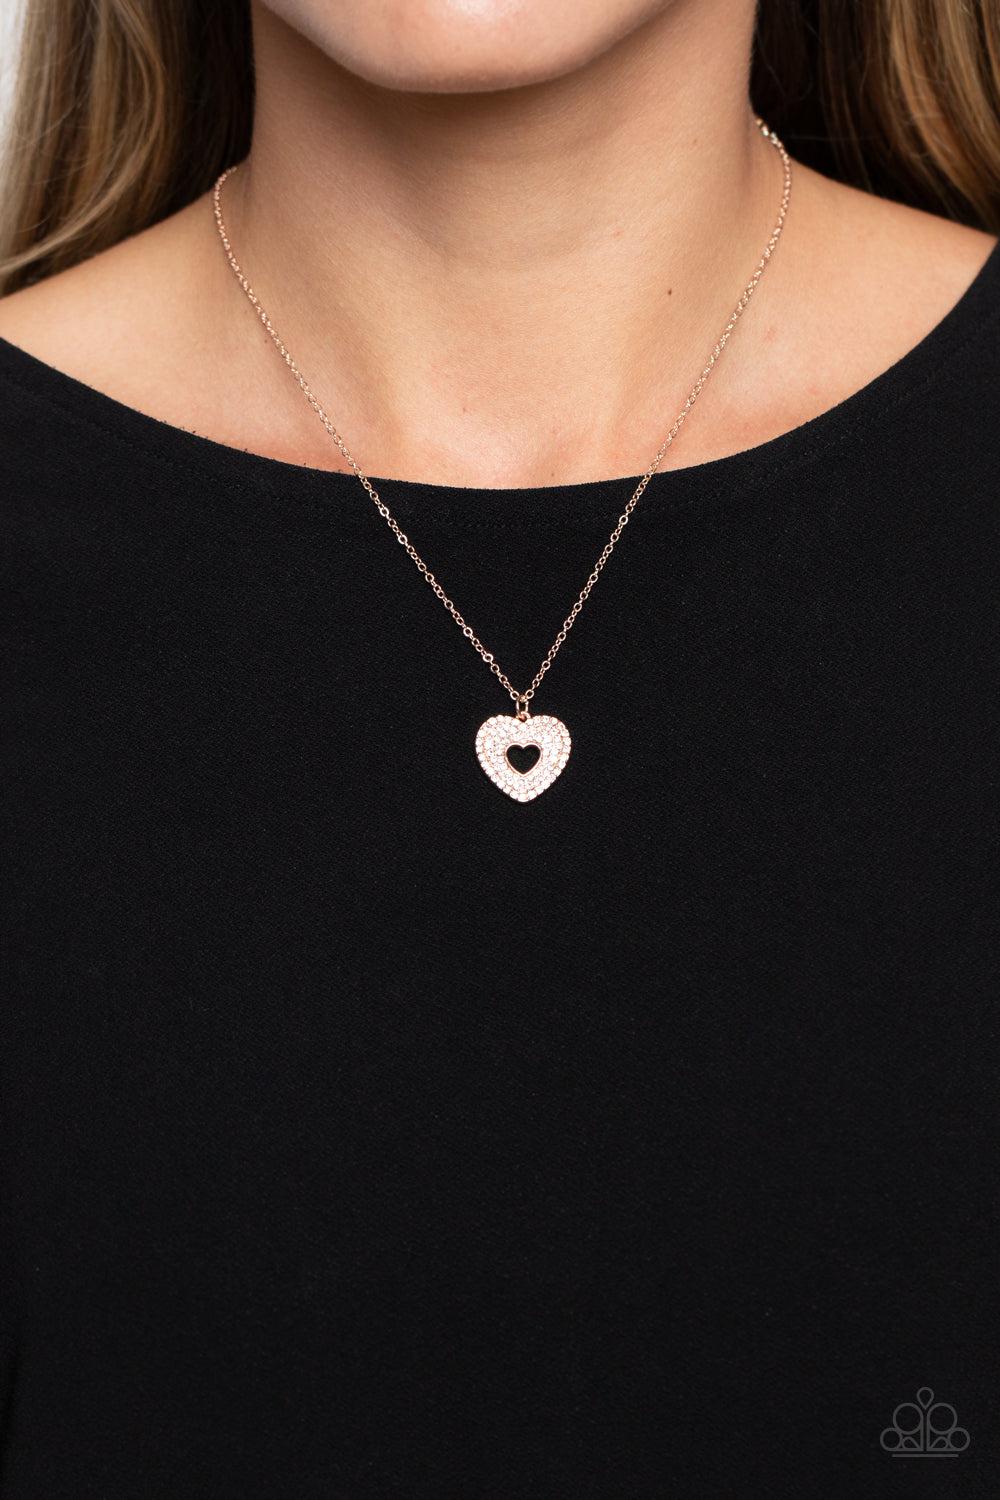 Romantic Retreat Rose Gold & White Rhinestone Heart Necklace - Paparazzi Accessories- lightbox - CarasShop.com - $5 Jewelry by Cara Jewels